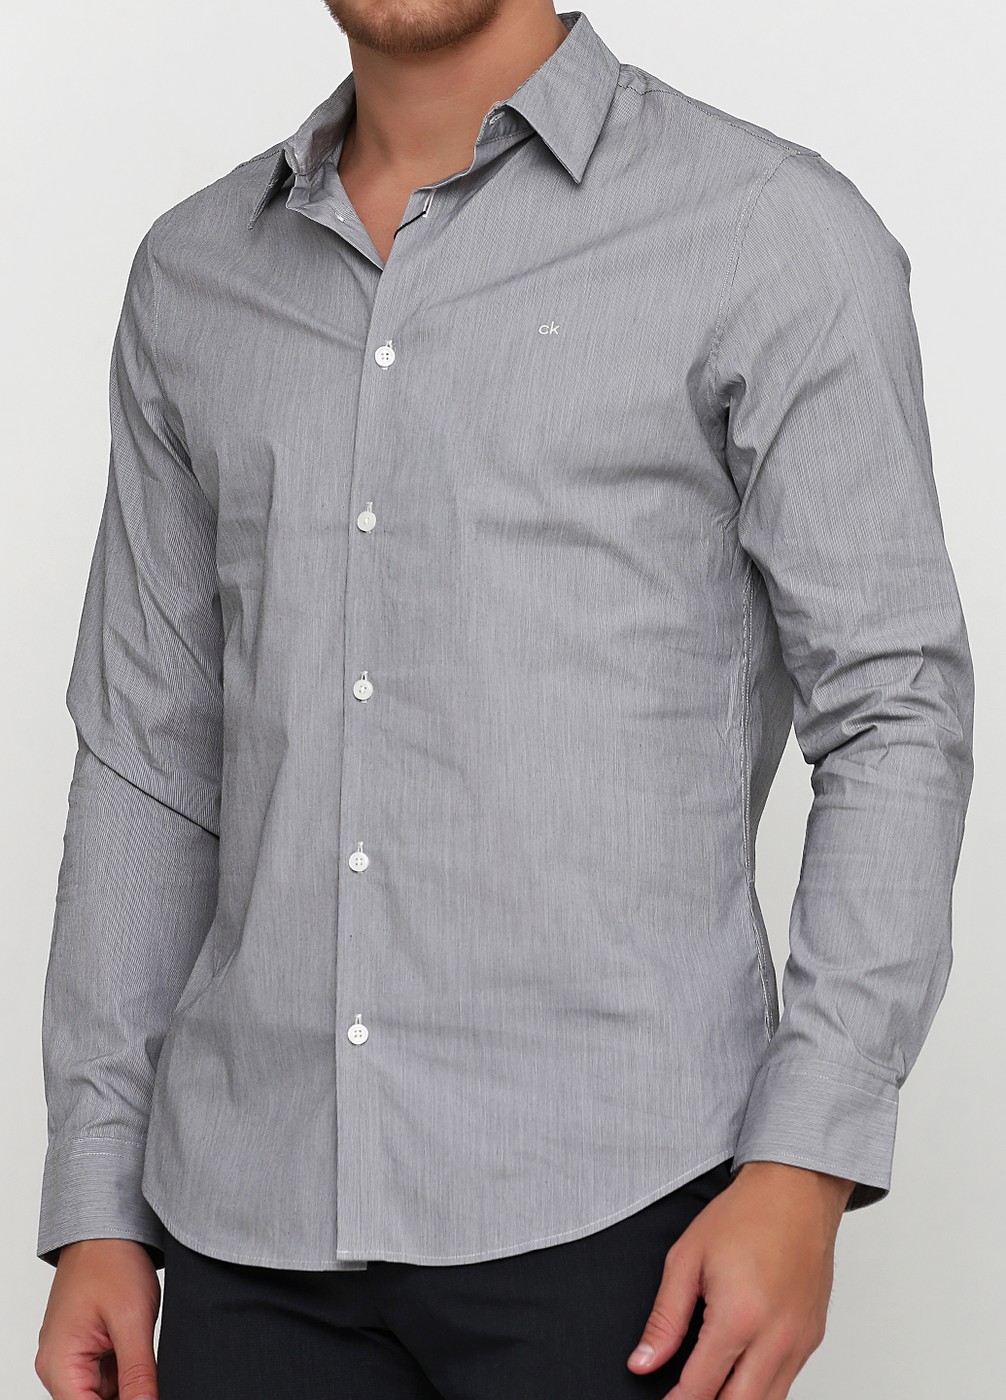 Мужская рубашка - рубашка Calvin Klein, L, L